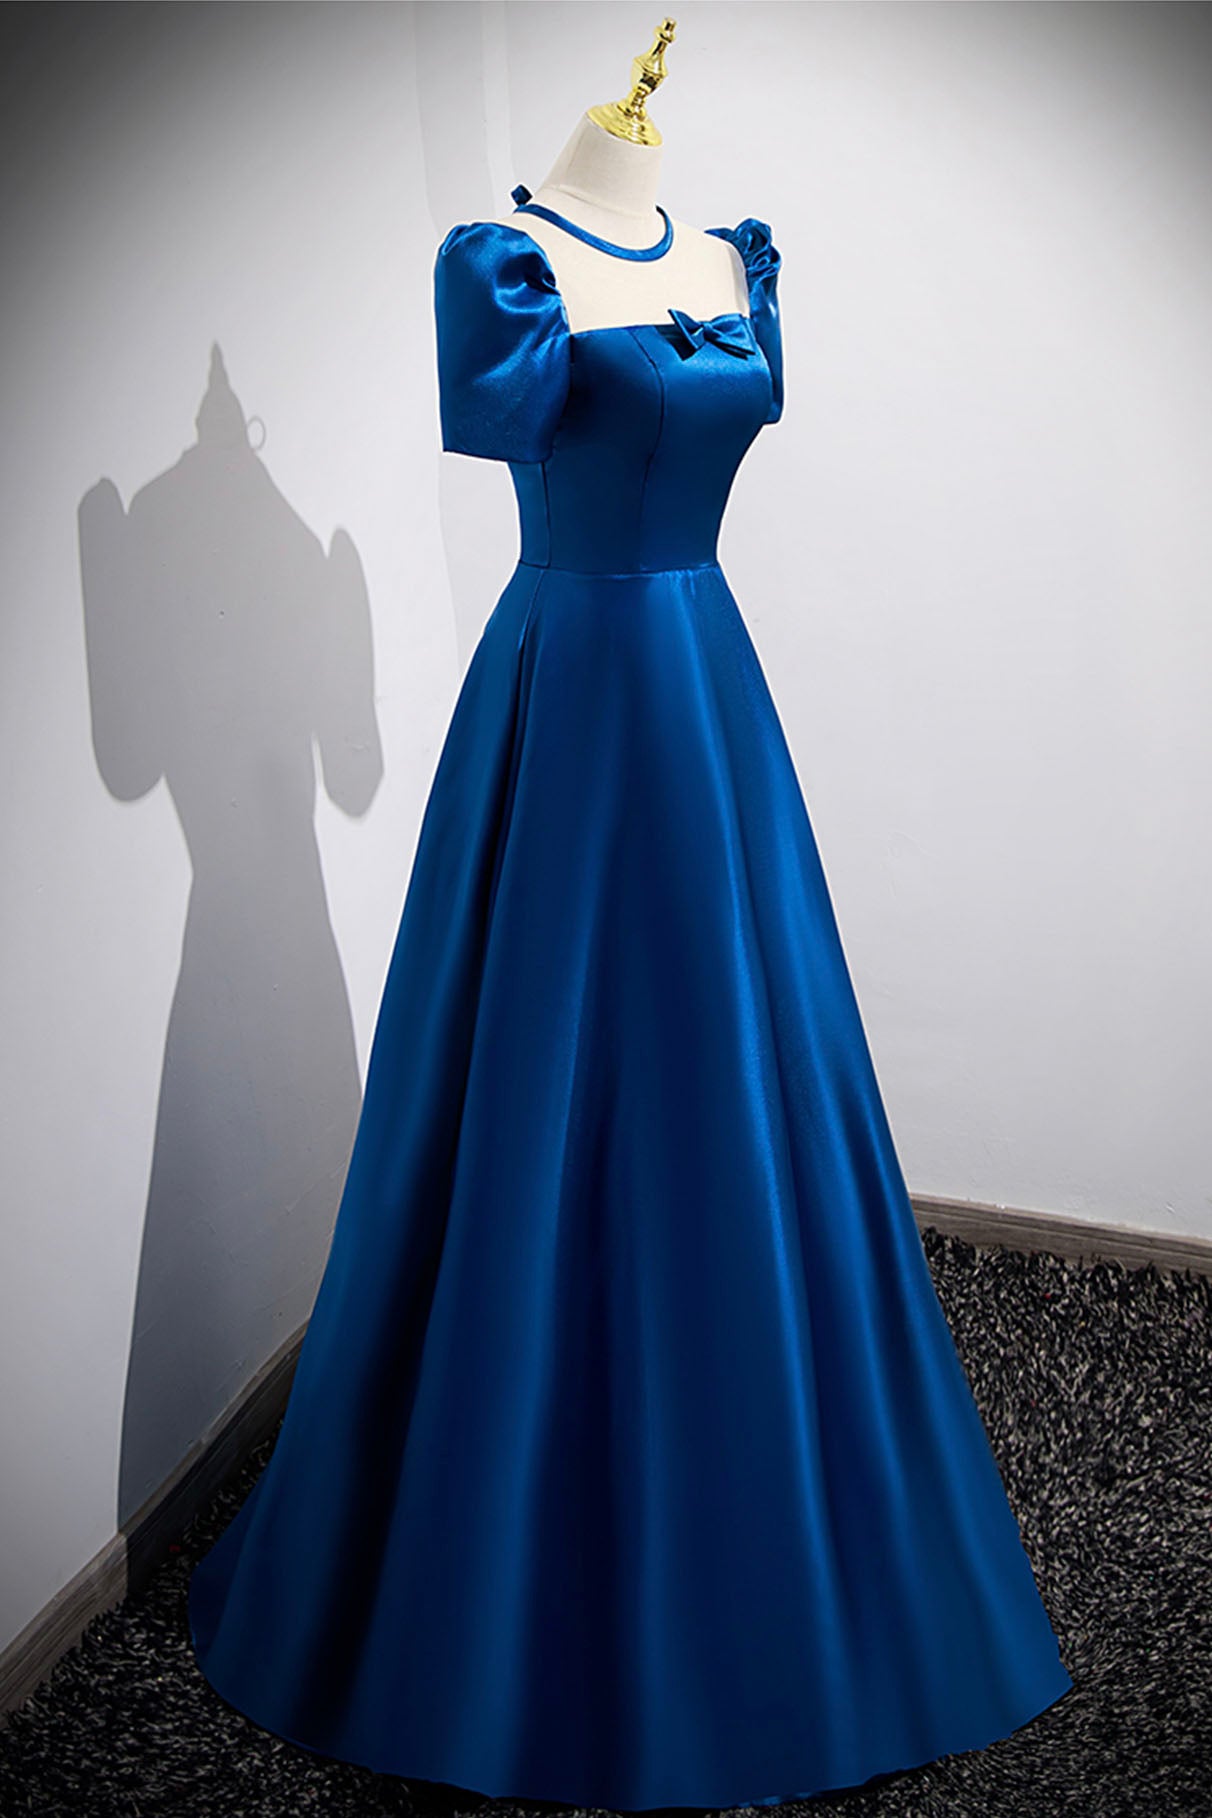 Blue Satin Long A-Line Prom Dress, Simple Blue Short Sleeve Evening Dress